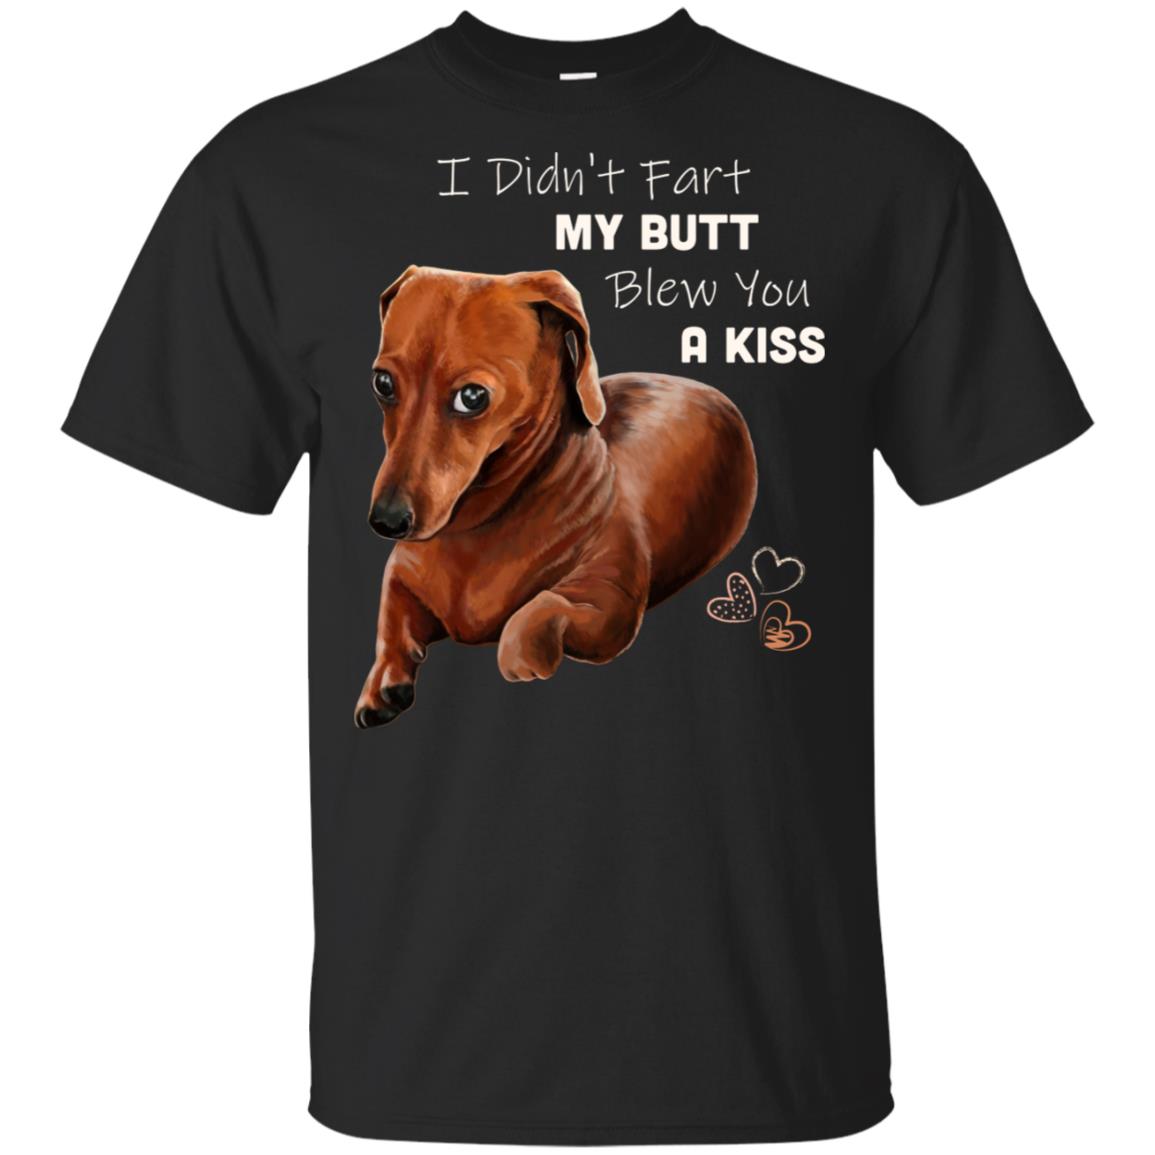 Wiener Dog, Dachshund T-Shirt, Dachshund gifts, I Didn't Fart My Butt Blew You A Kiss, Funny Shirt - GoneBold.gift